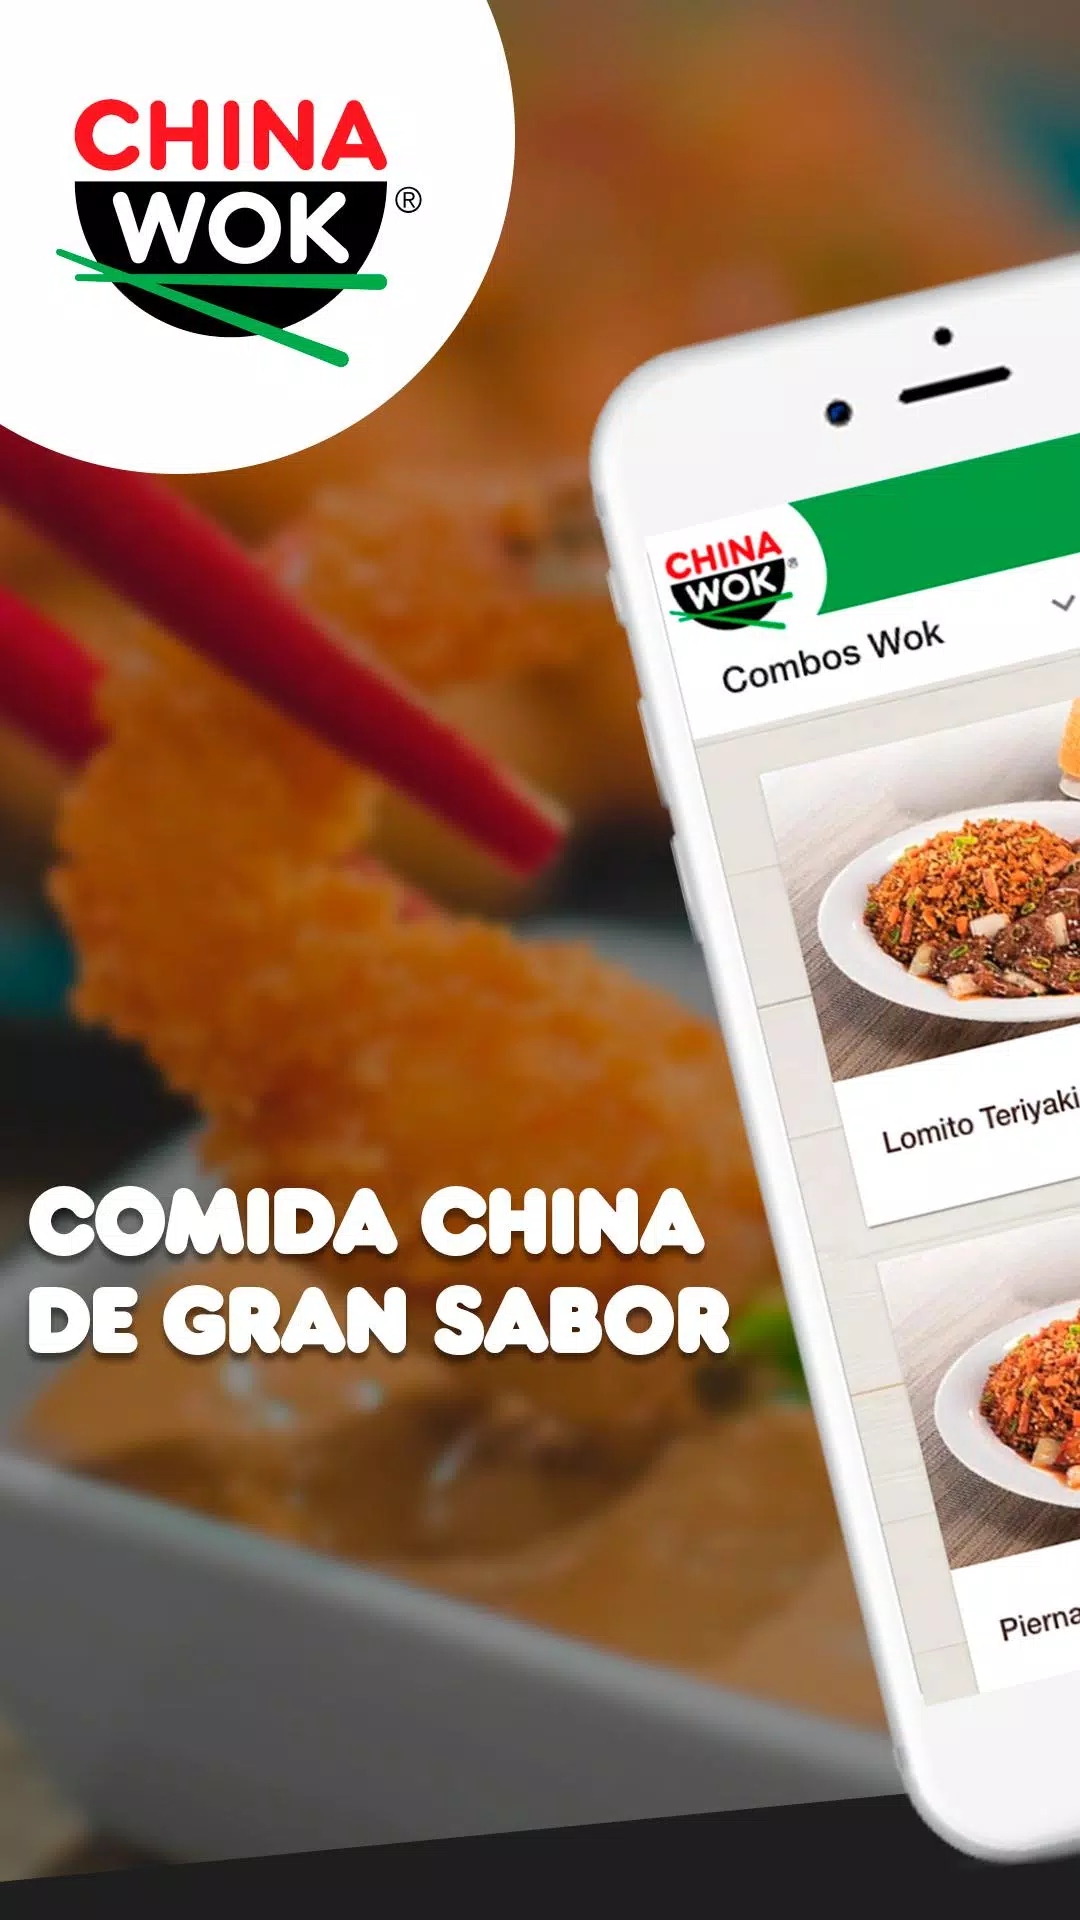 China Wok El Salvador APK for Android Download